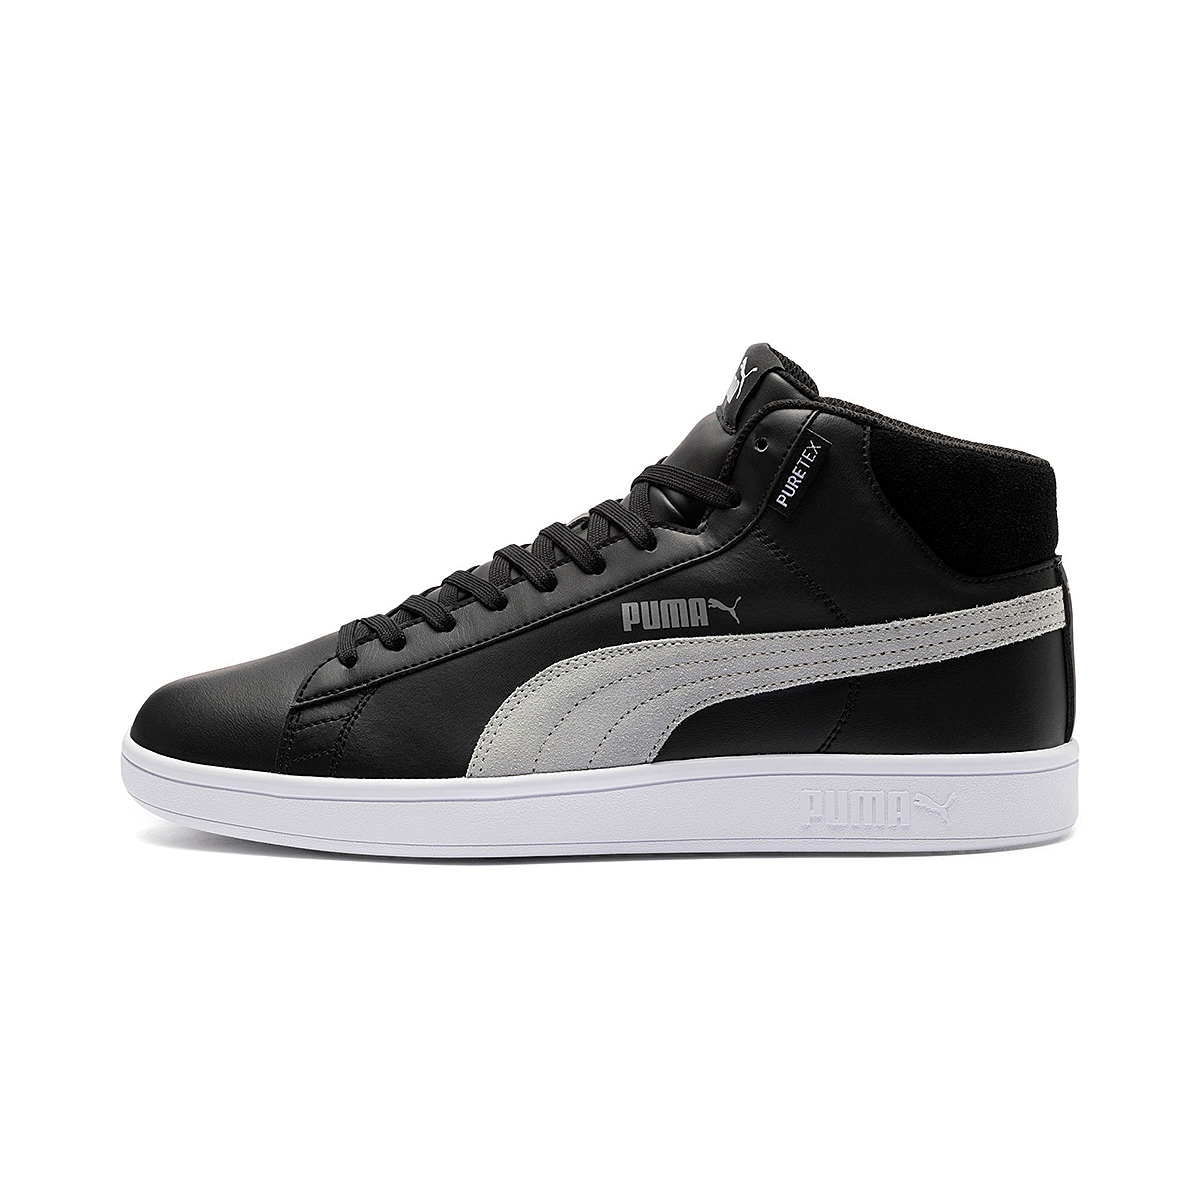 Puma Smash v2 Mid PureTEX Unisex Sneaker Schuh schwarz 367853 01